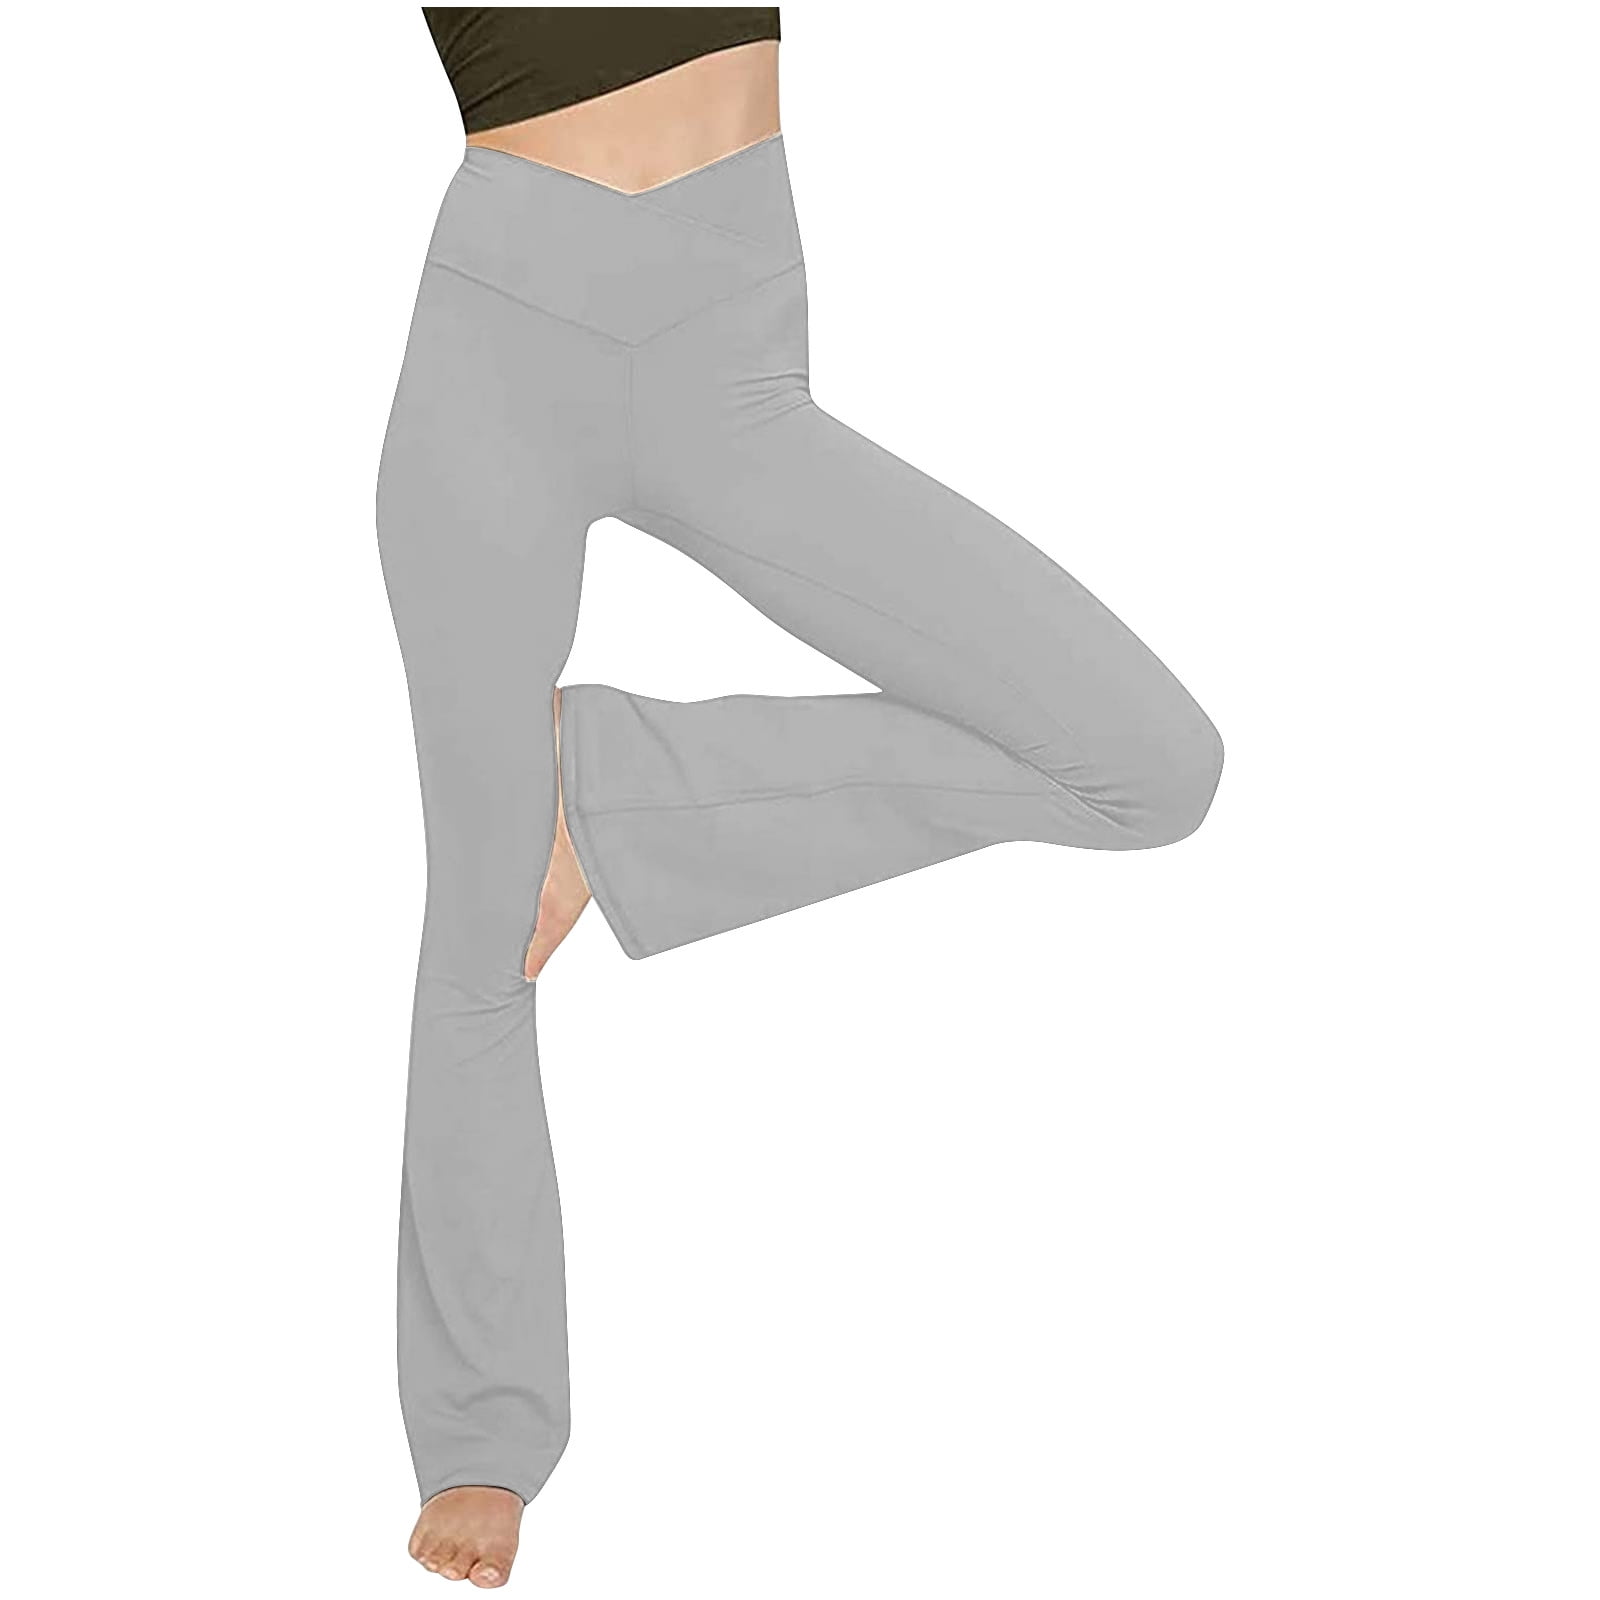 Reduce Price Hfyihgf Bootcut Yoga Pants for Women High Waist Dress Pants  Bootleg Workout Pant Stylish Flared Leggings for Casual Work(Dark Gray,L)